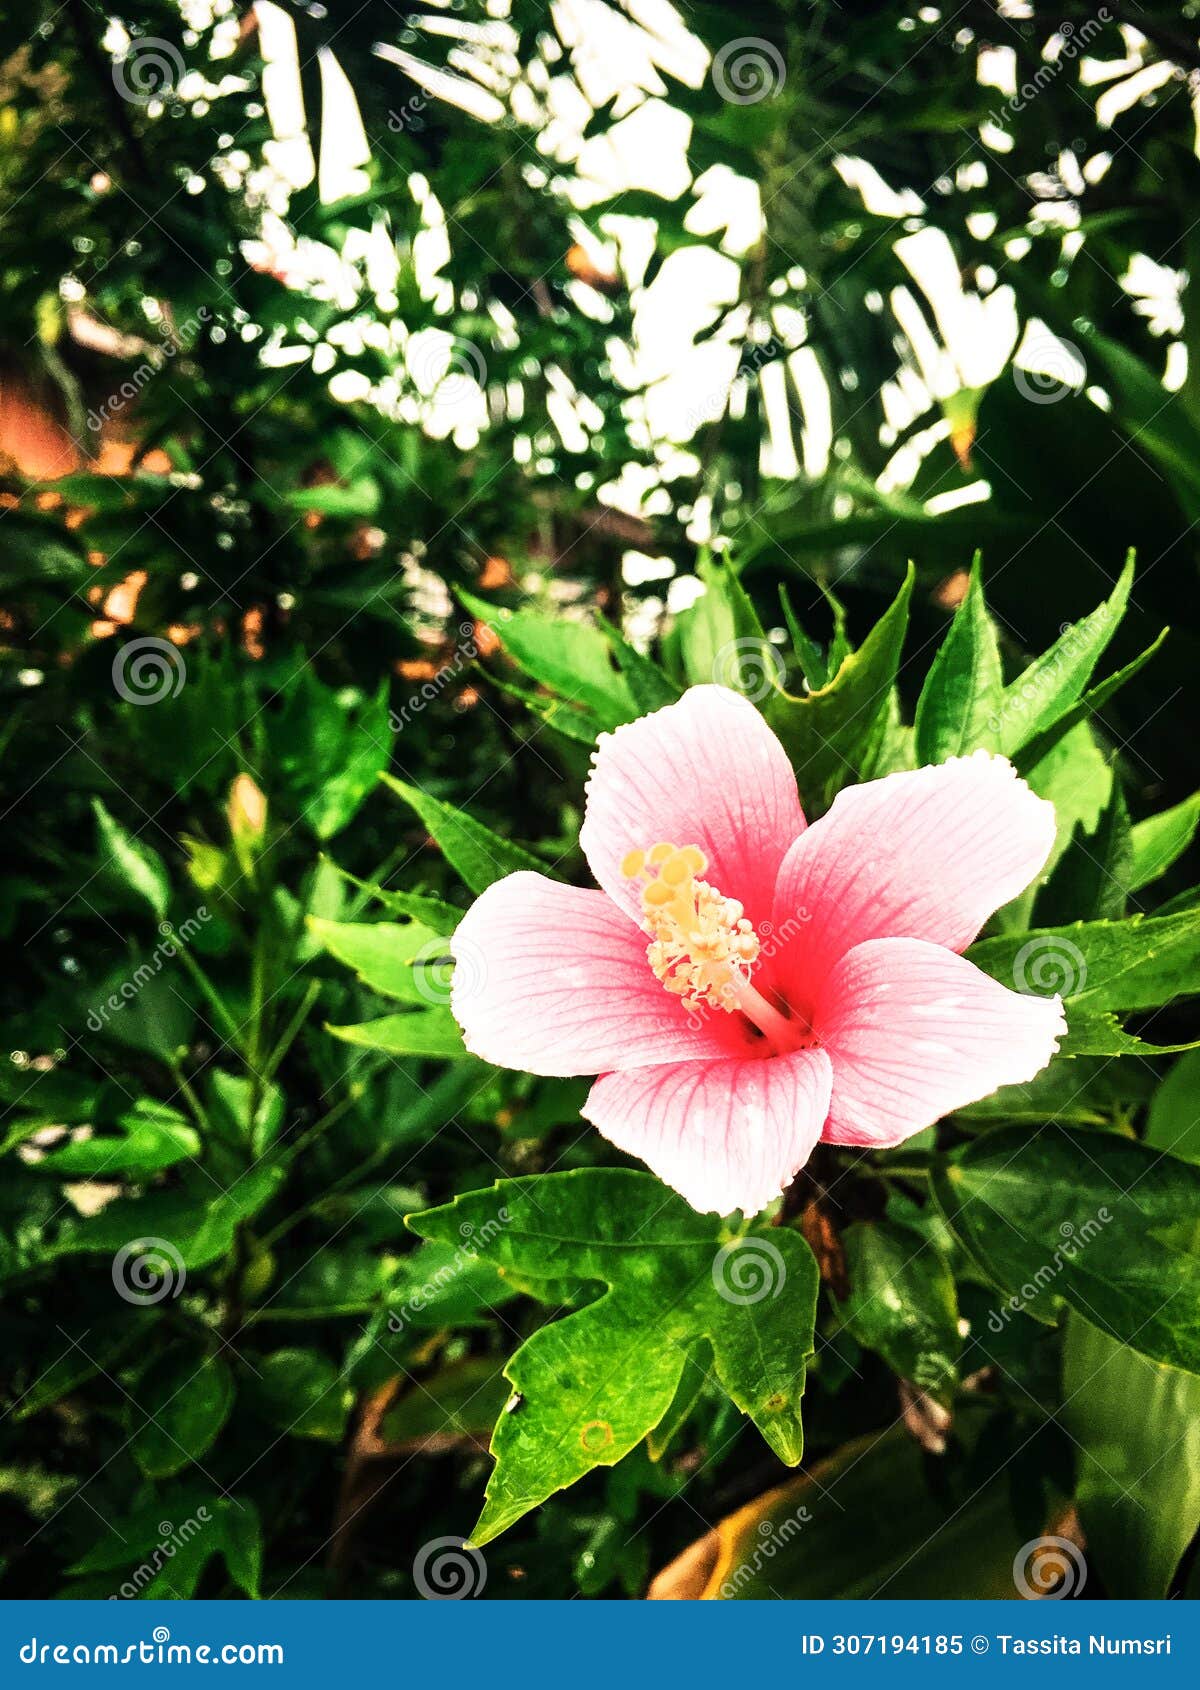 chaba flower in the back garden